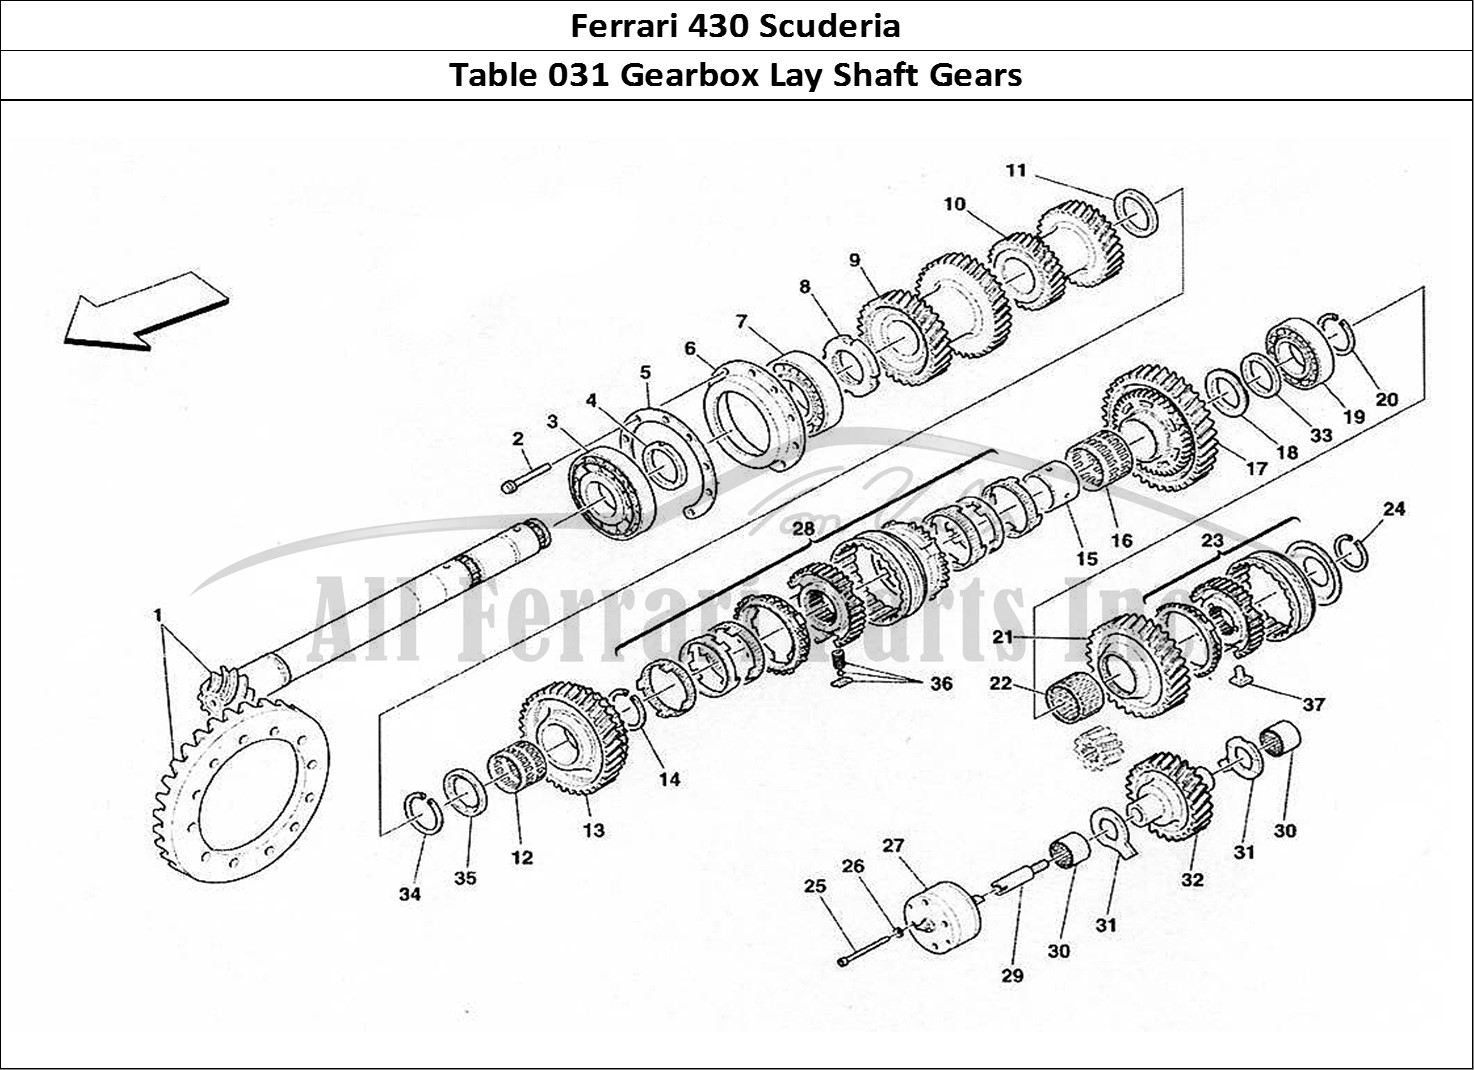 Ferrari Parts Ferrari 430 Scuderia Page 031 Lay Shaft Gears